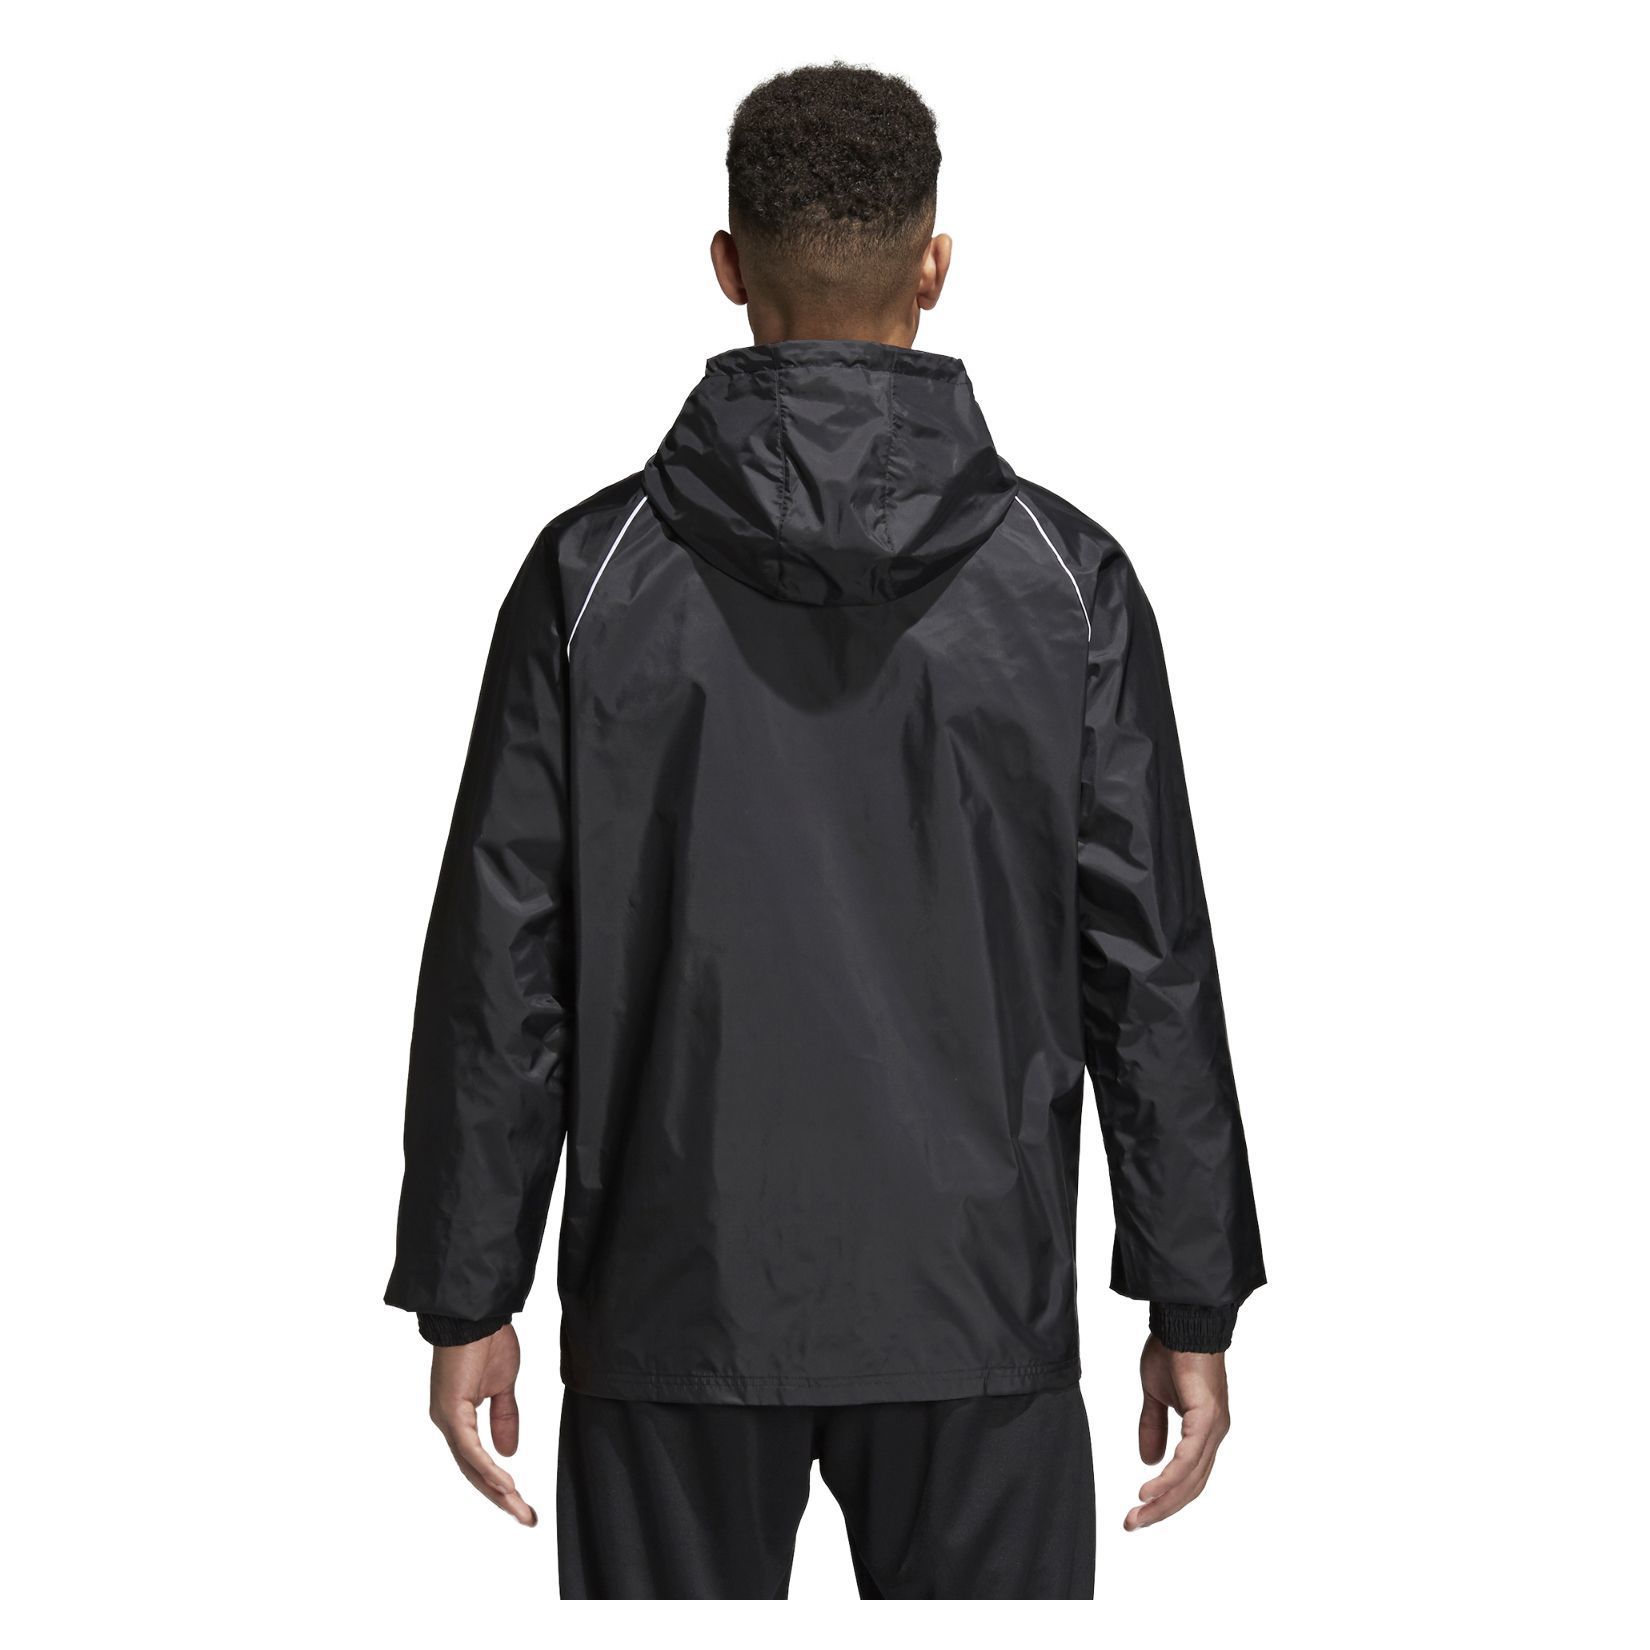 adidas men's core 18 rain jacket